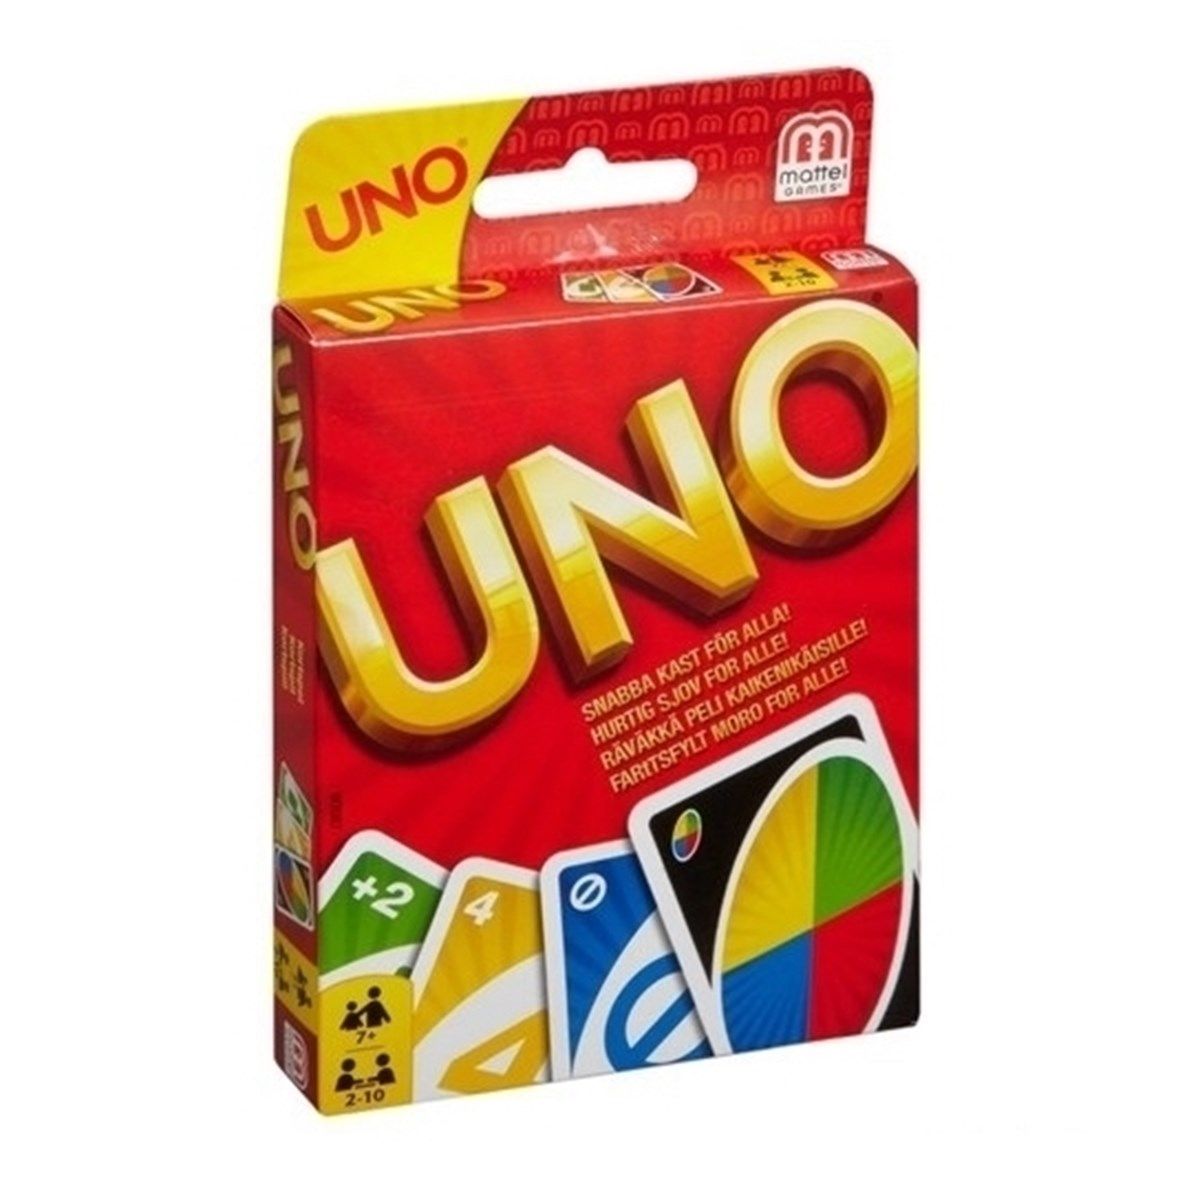 Uno Kart Oyunları Standlı W2087